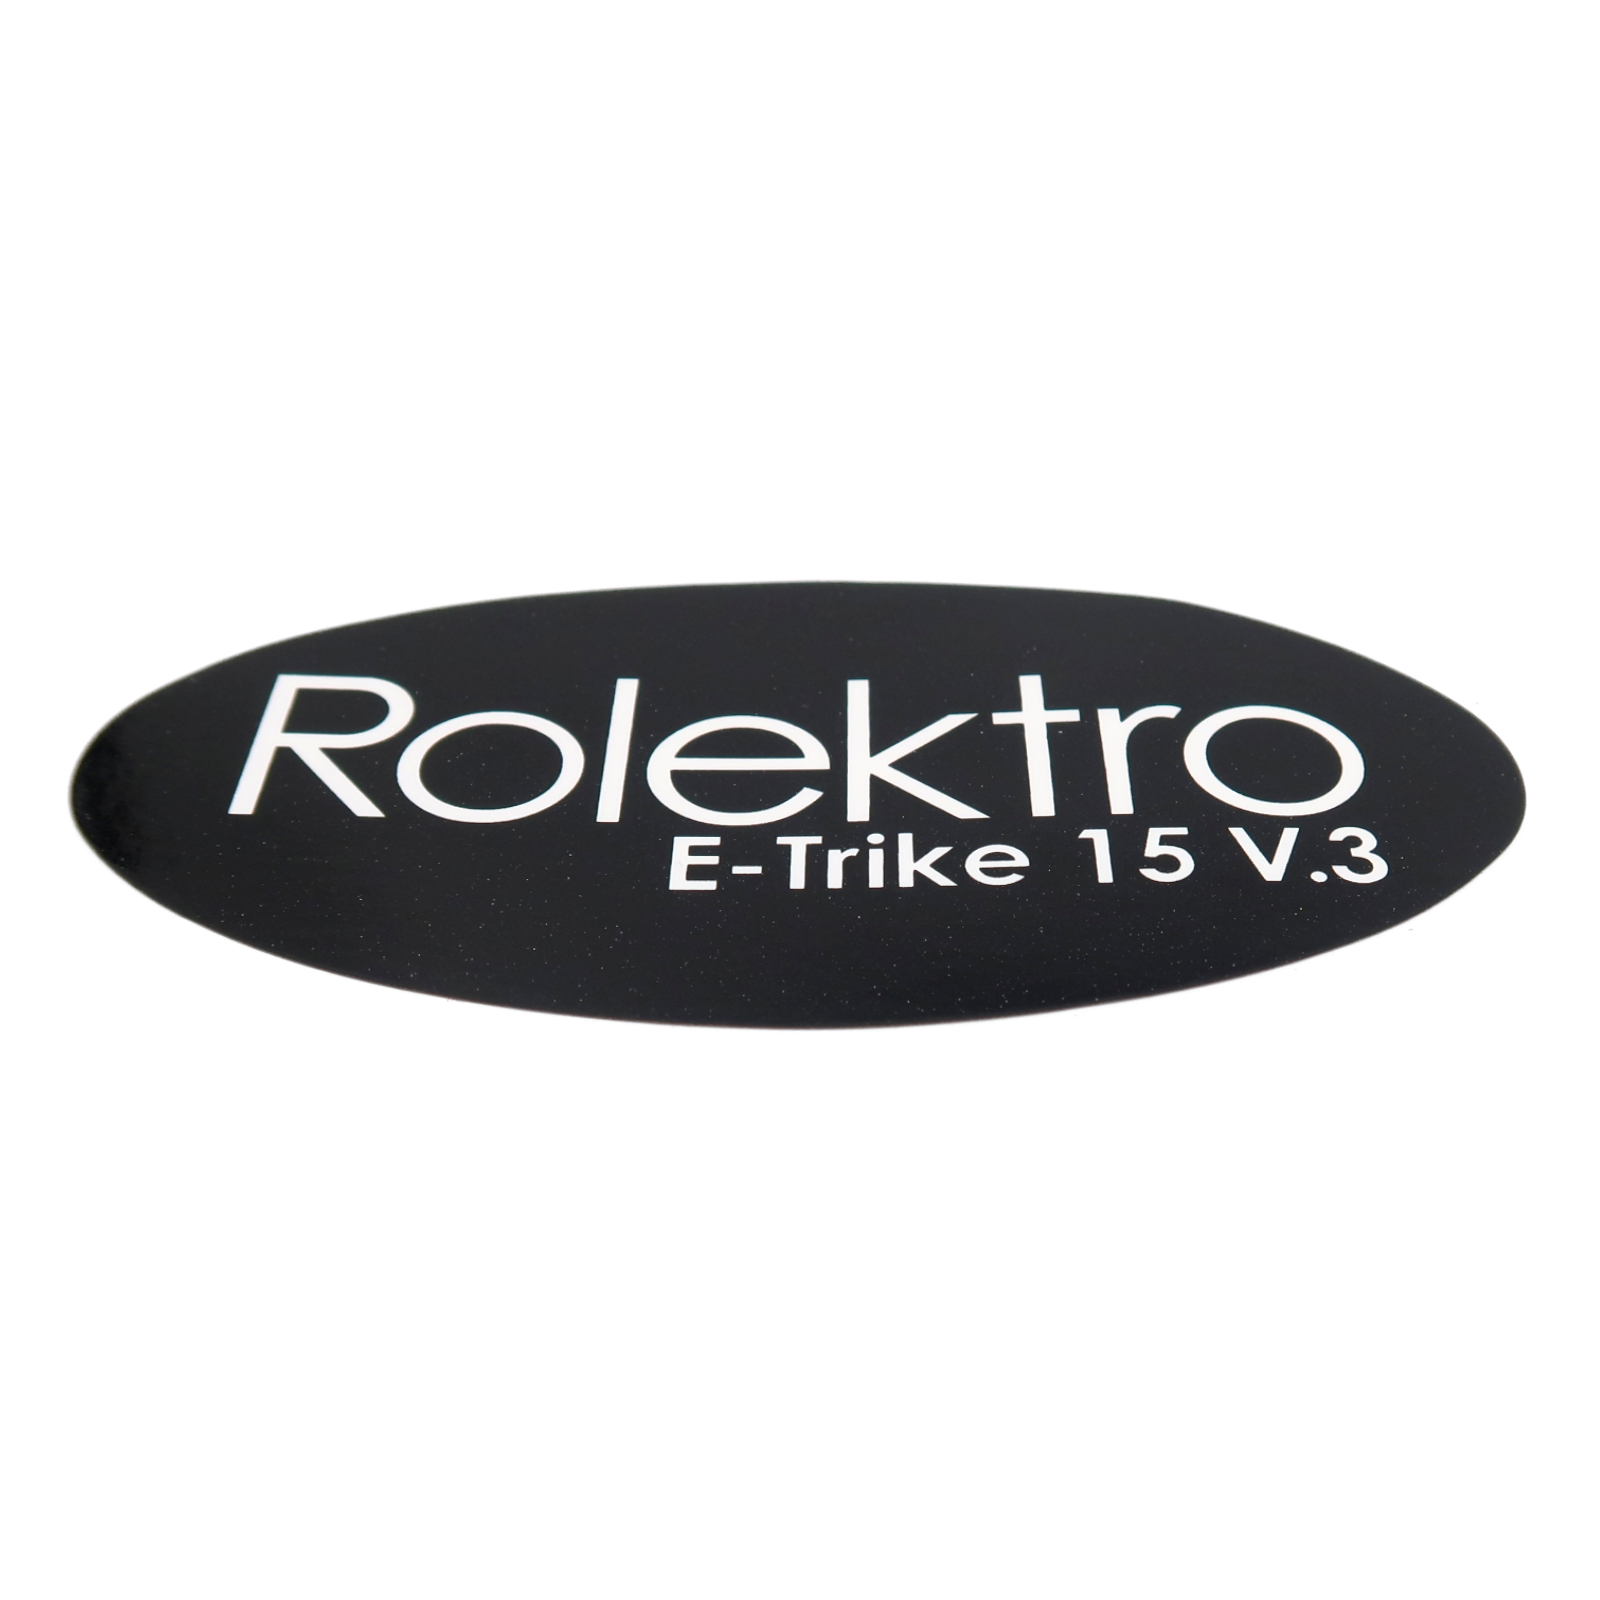 Trike15V3/R31 - Aufkleber Frontschürze "Rolektro E-Trike 15 V.3"